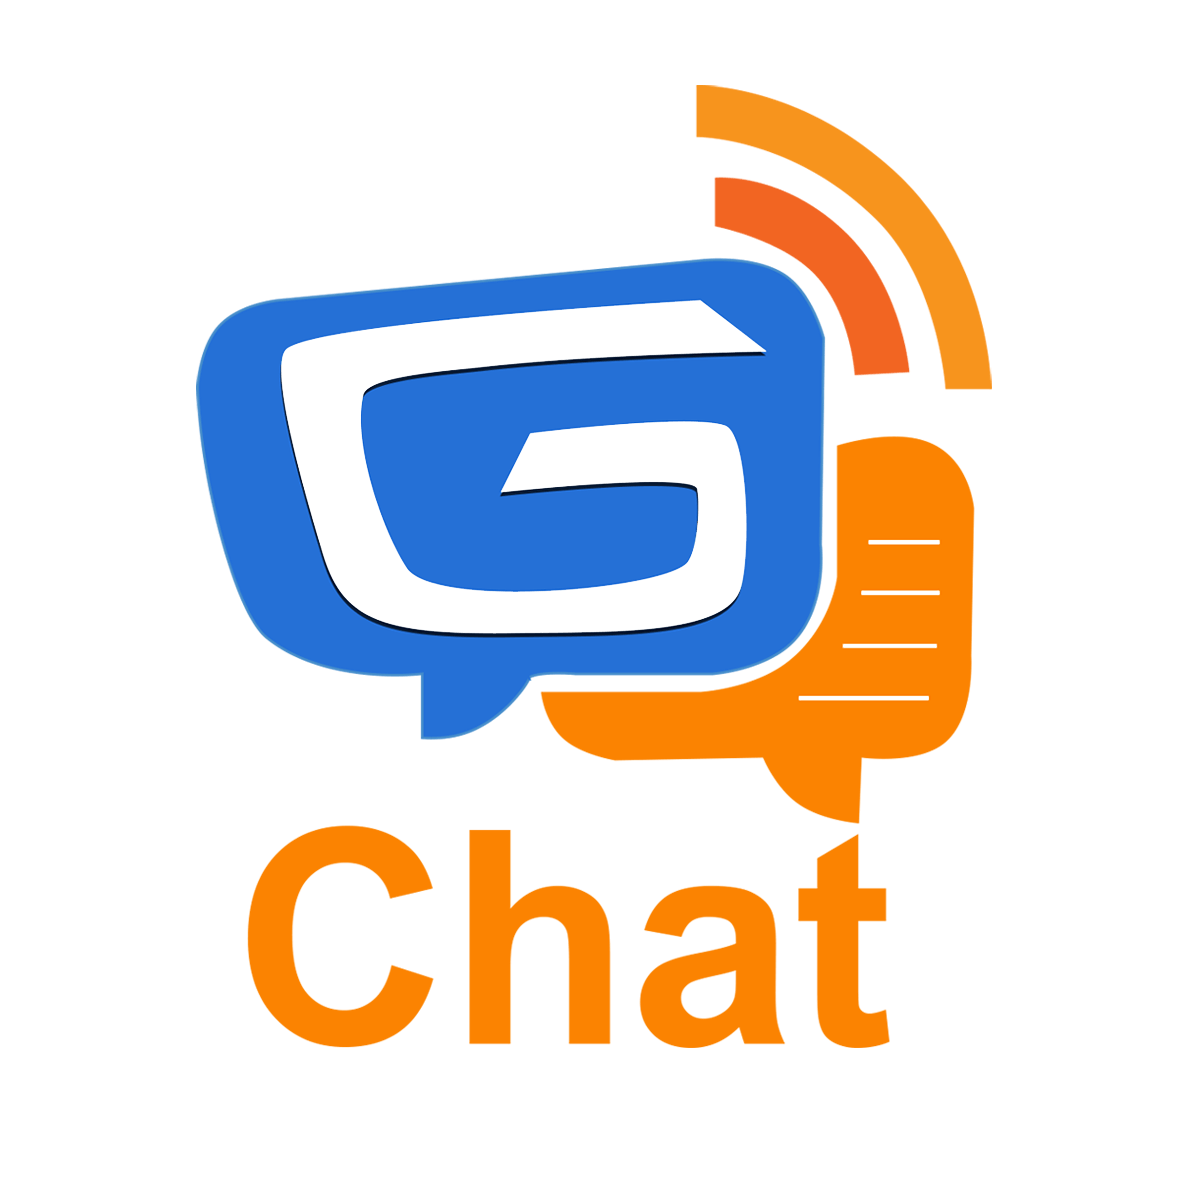 Gchat Logo - GCHat